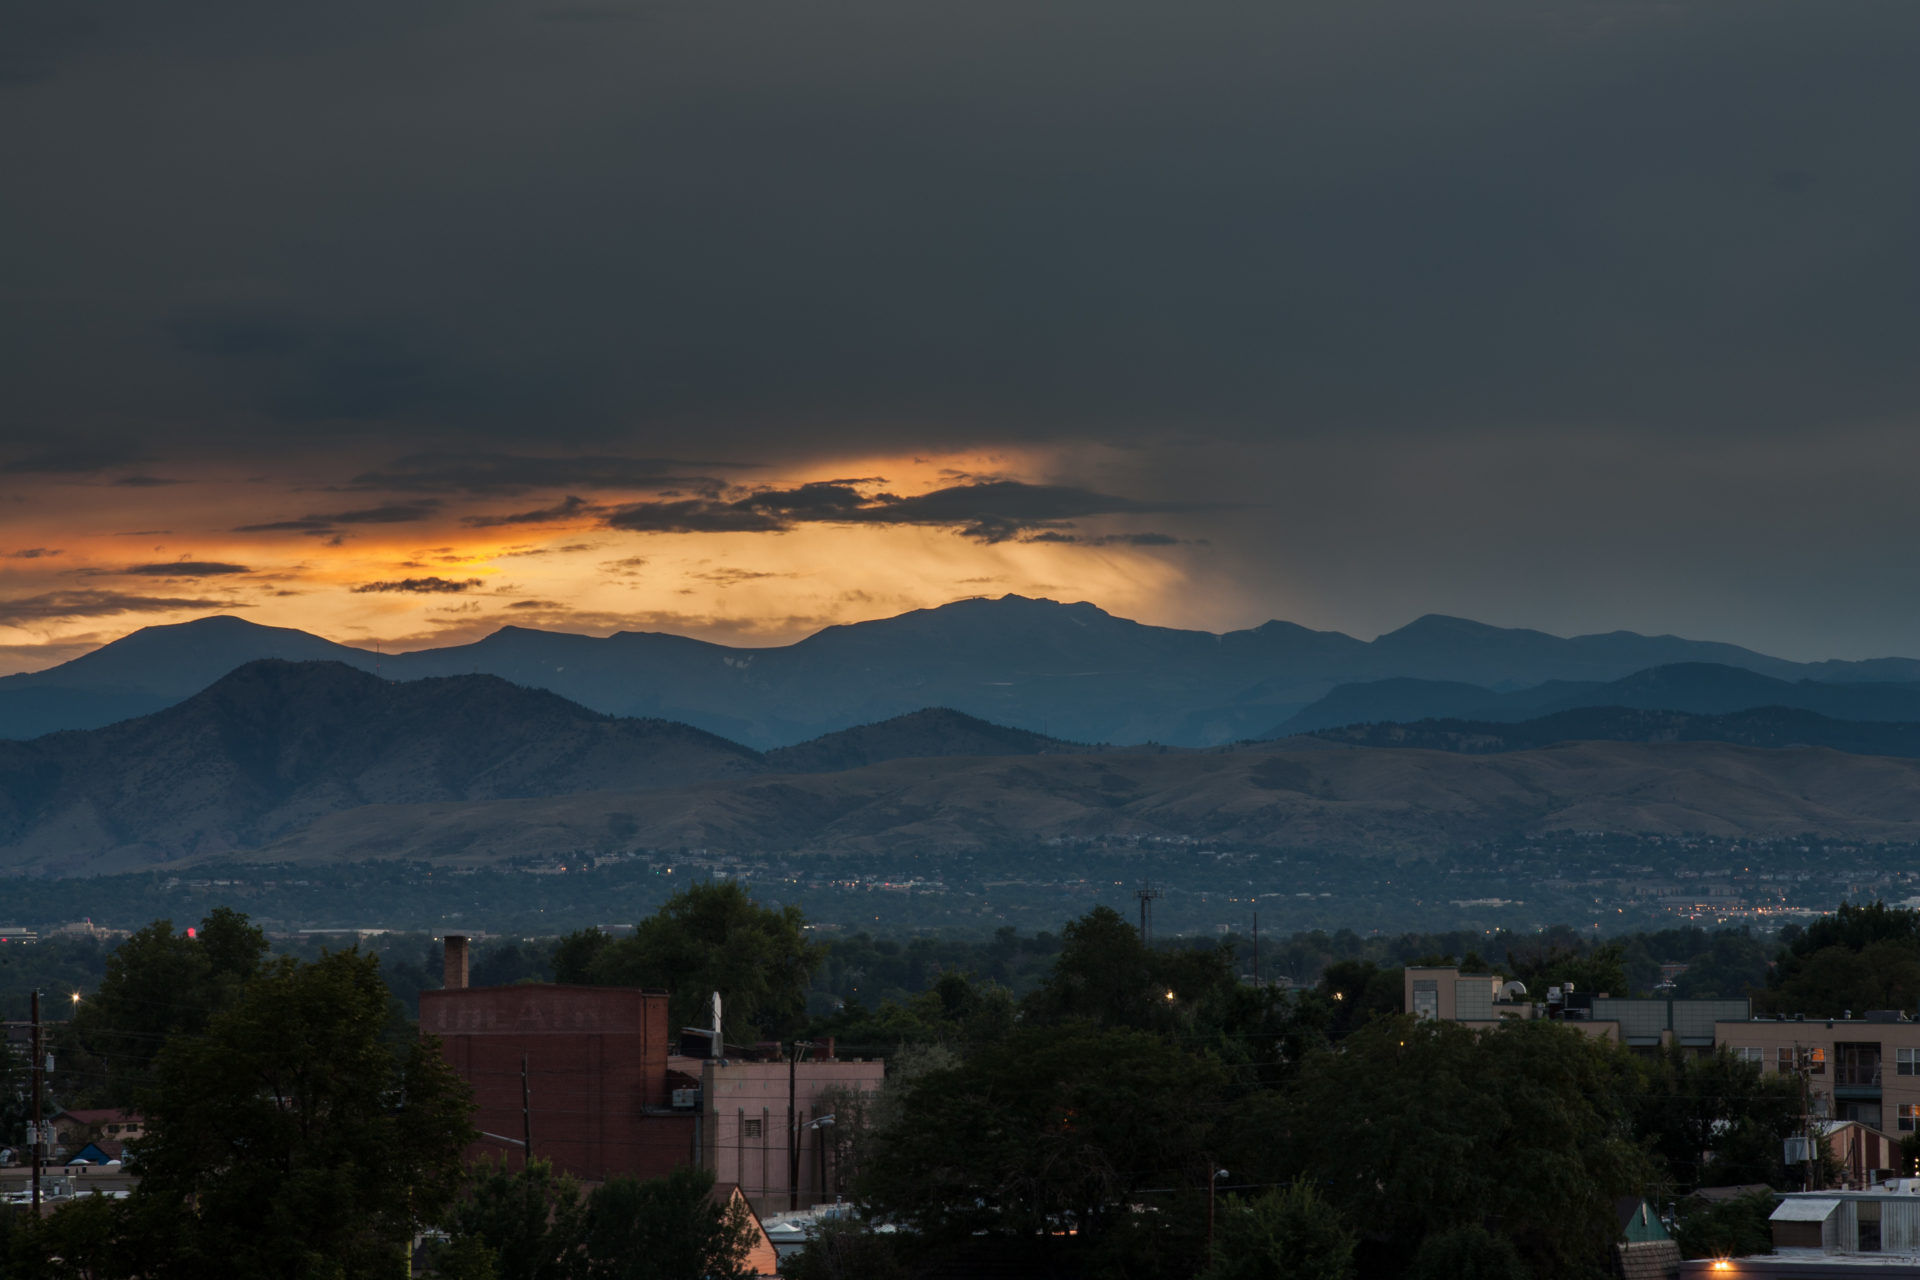 Mount Evans sunset - August 24, 2011